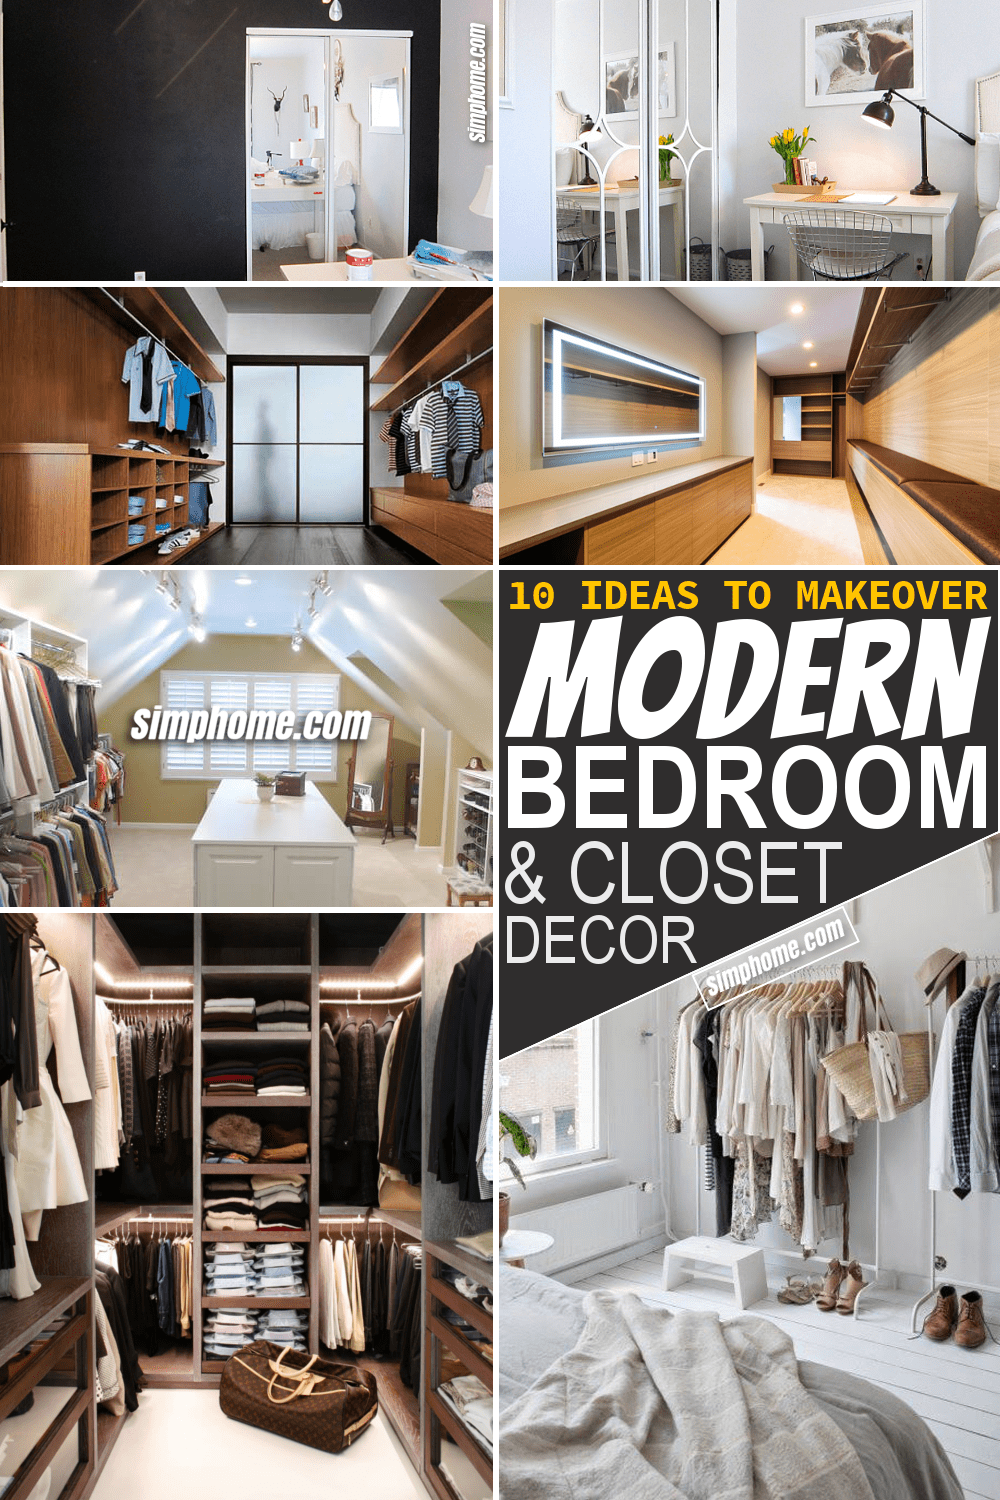 Simphome.com 10 makeover modern bedroom closet ideas Featured Pinterest